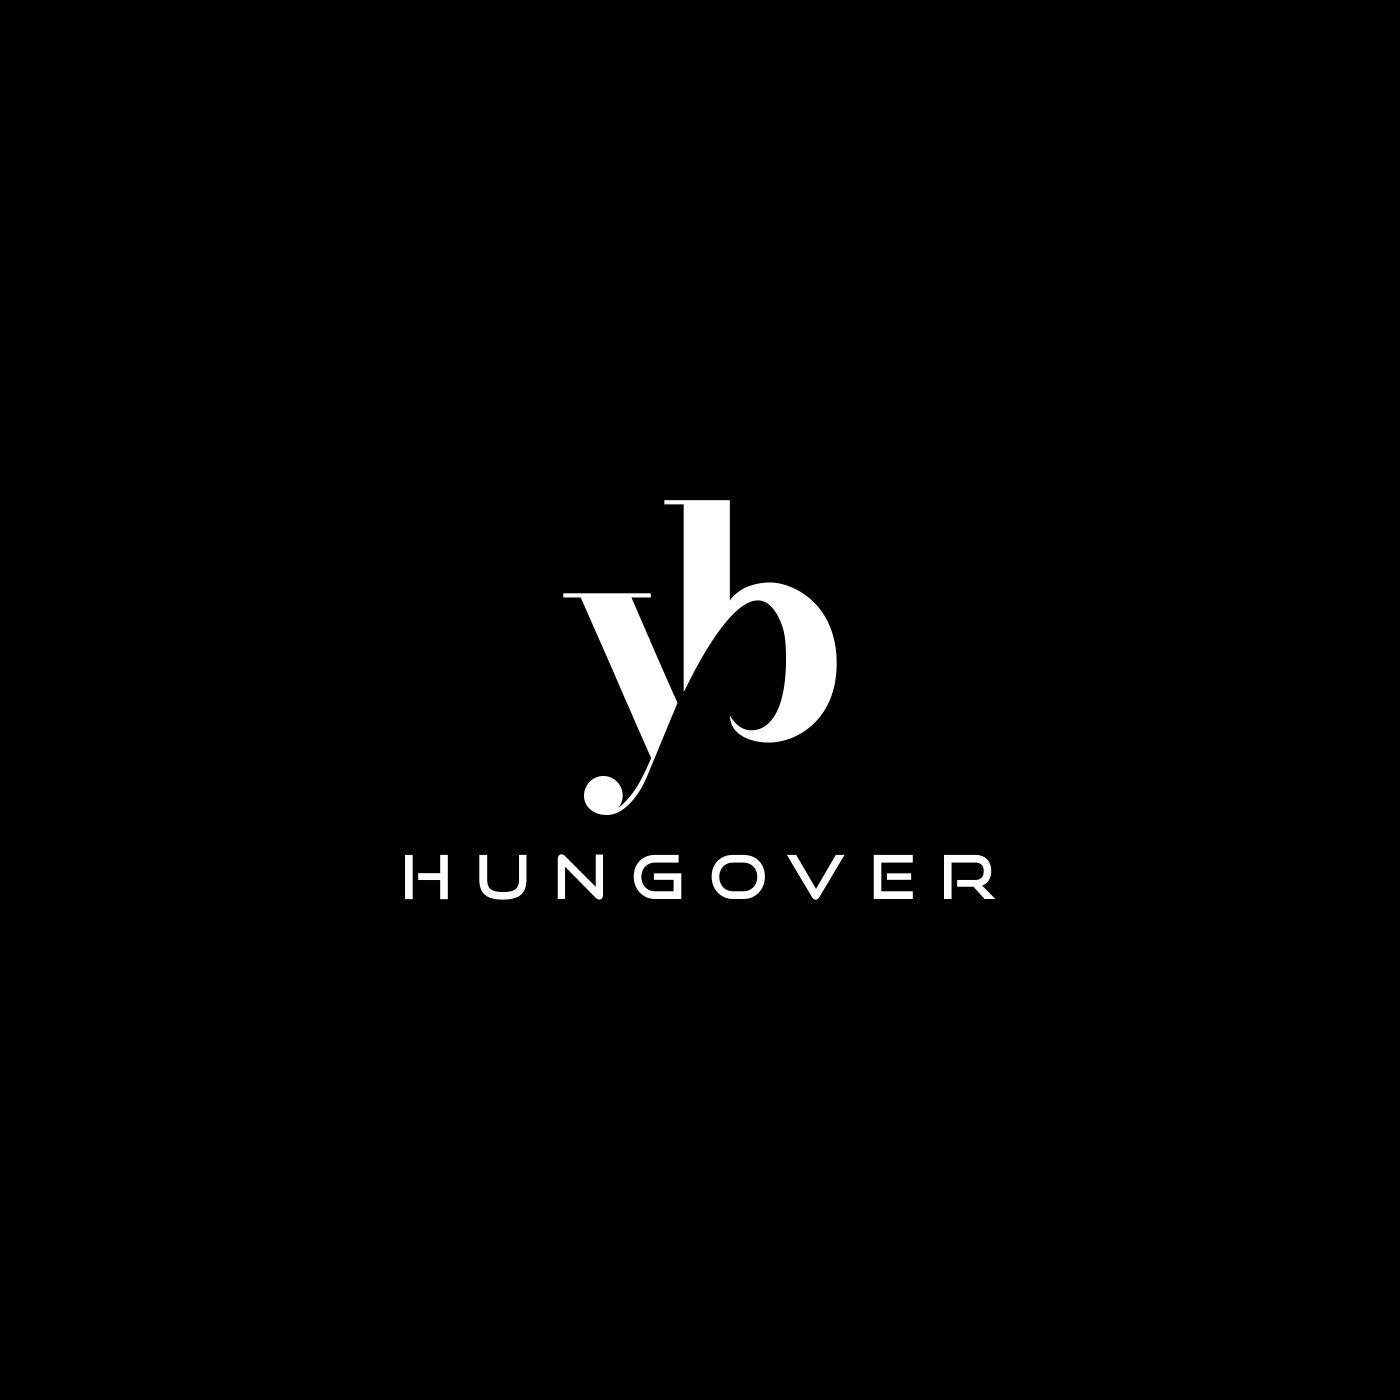 YB Logo - Bold, Professional, Health And Wellness Logo Design for YB HUNGOVER